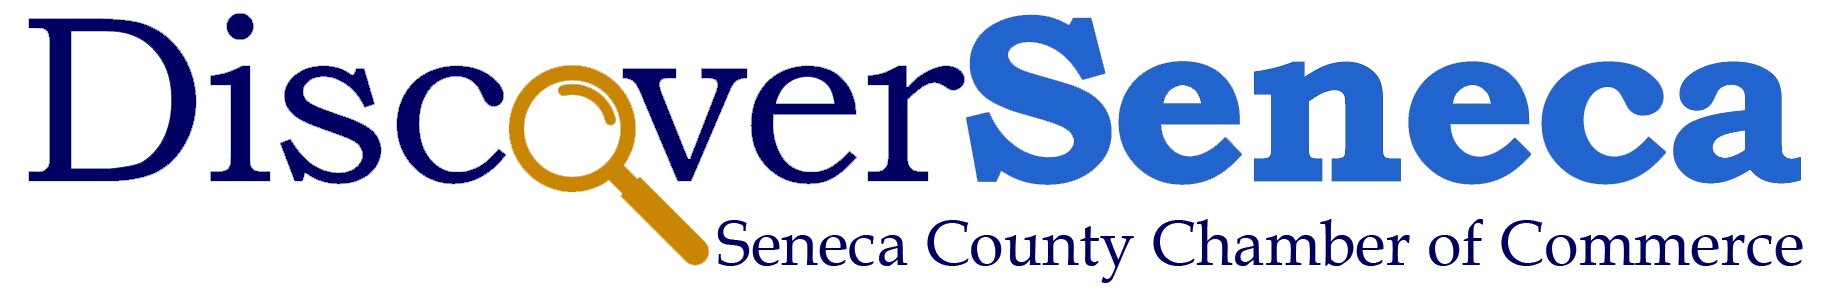 Discover Seneca_Chamber_sc logo.jpg